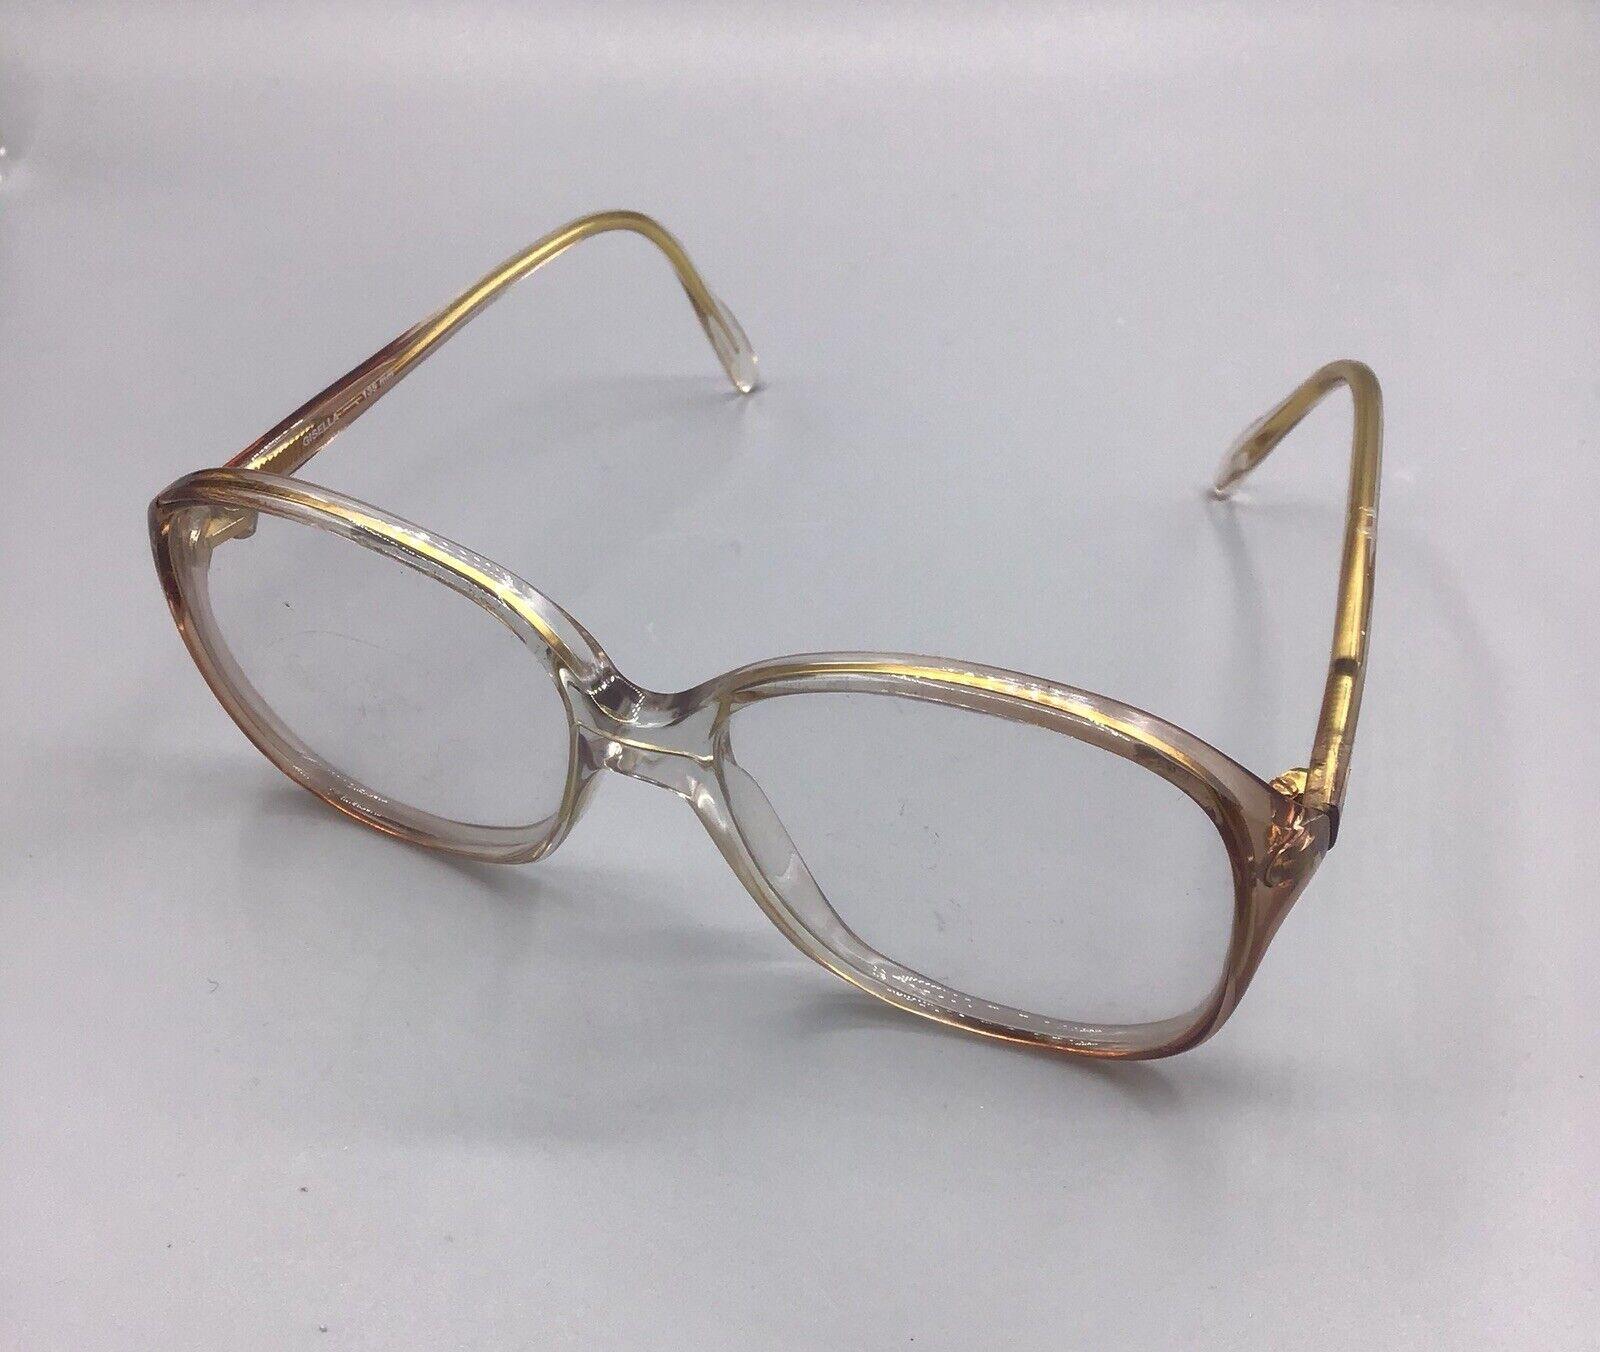 Morwen occhiale vintage eyewear frame italy col. 821 FILO DE ORO model GISELLA brillen